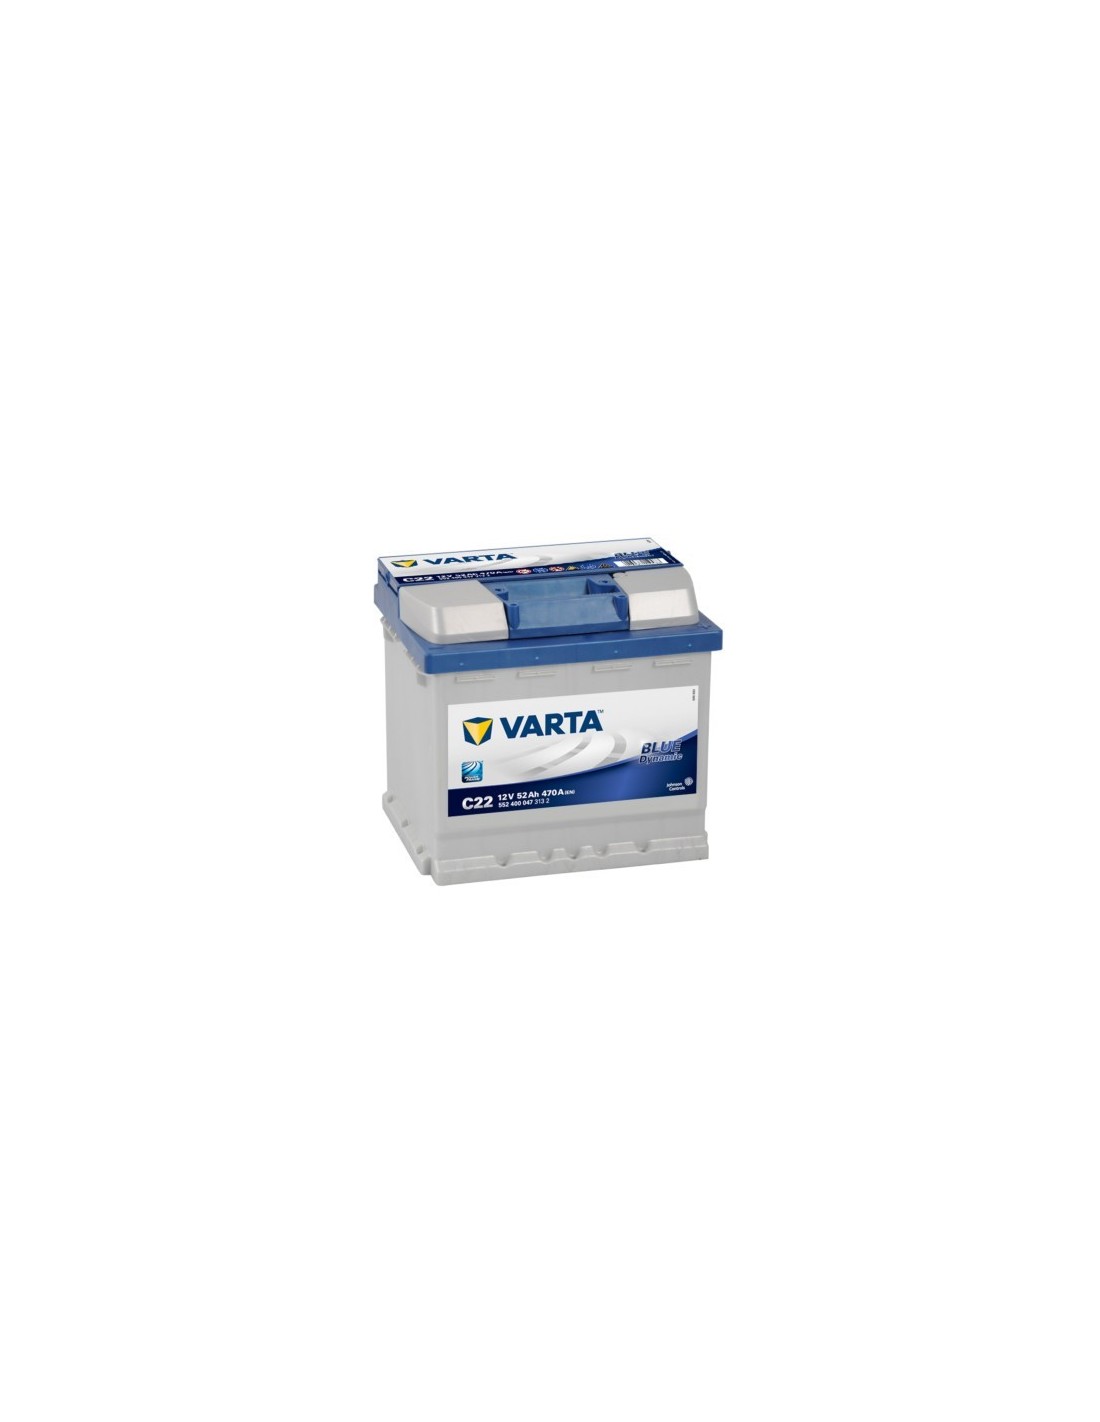 VARTA BLUE Dynamic Accu starter battery 12V 52Ah for petrol cars